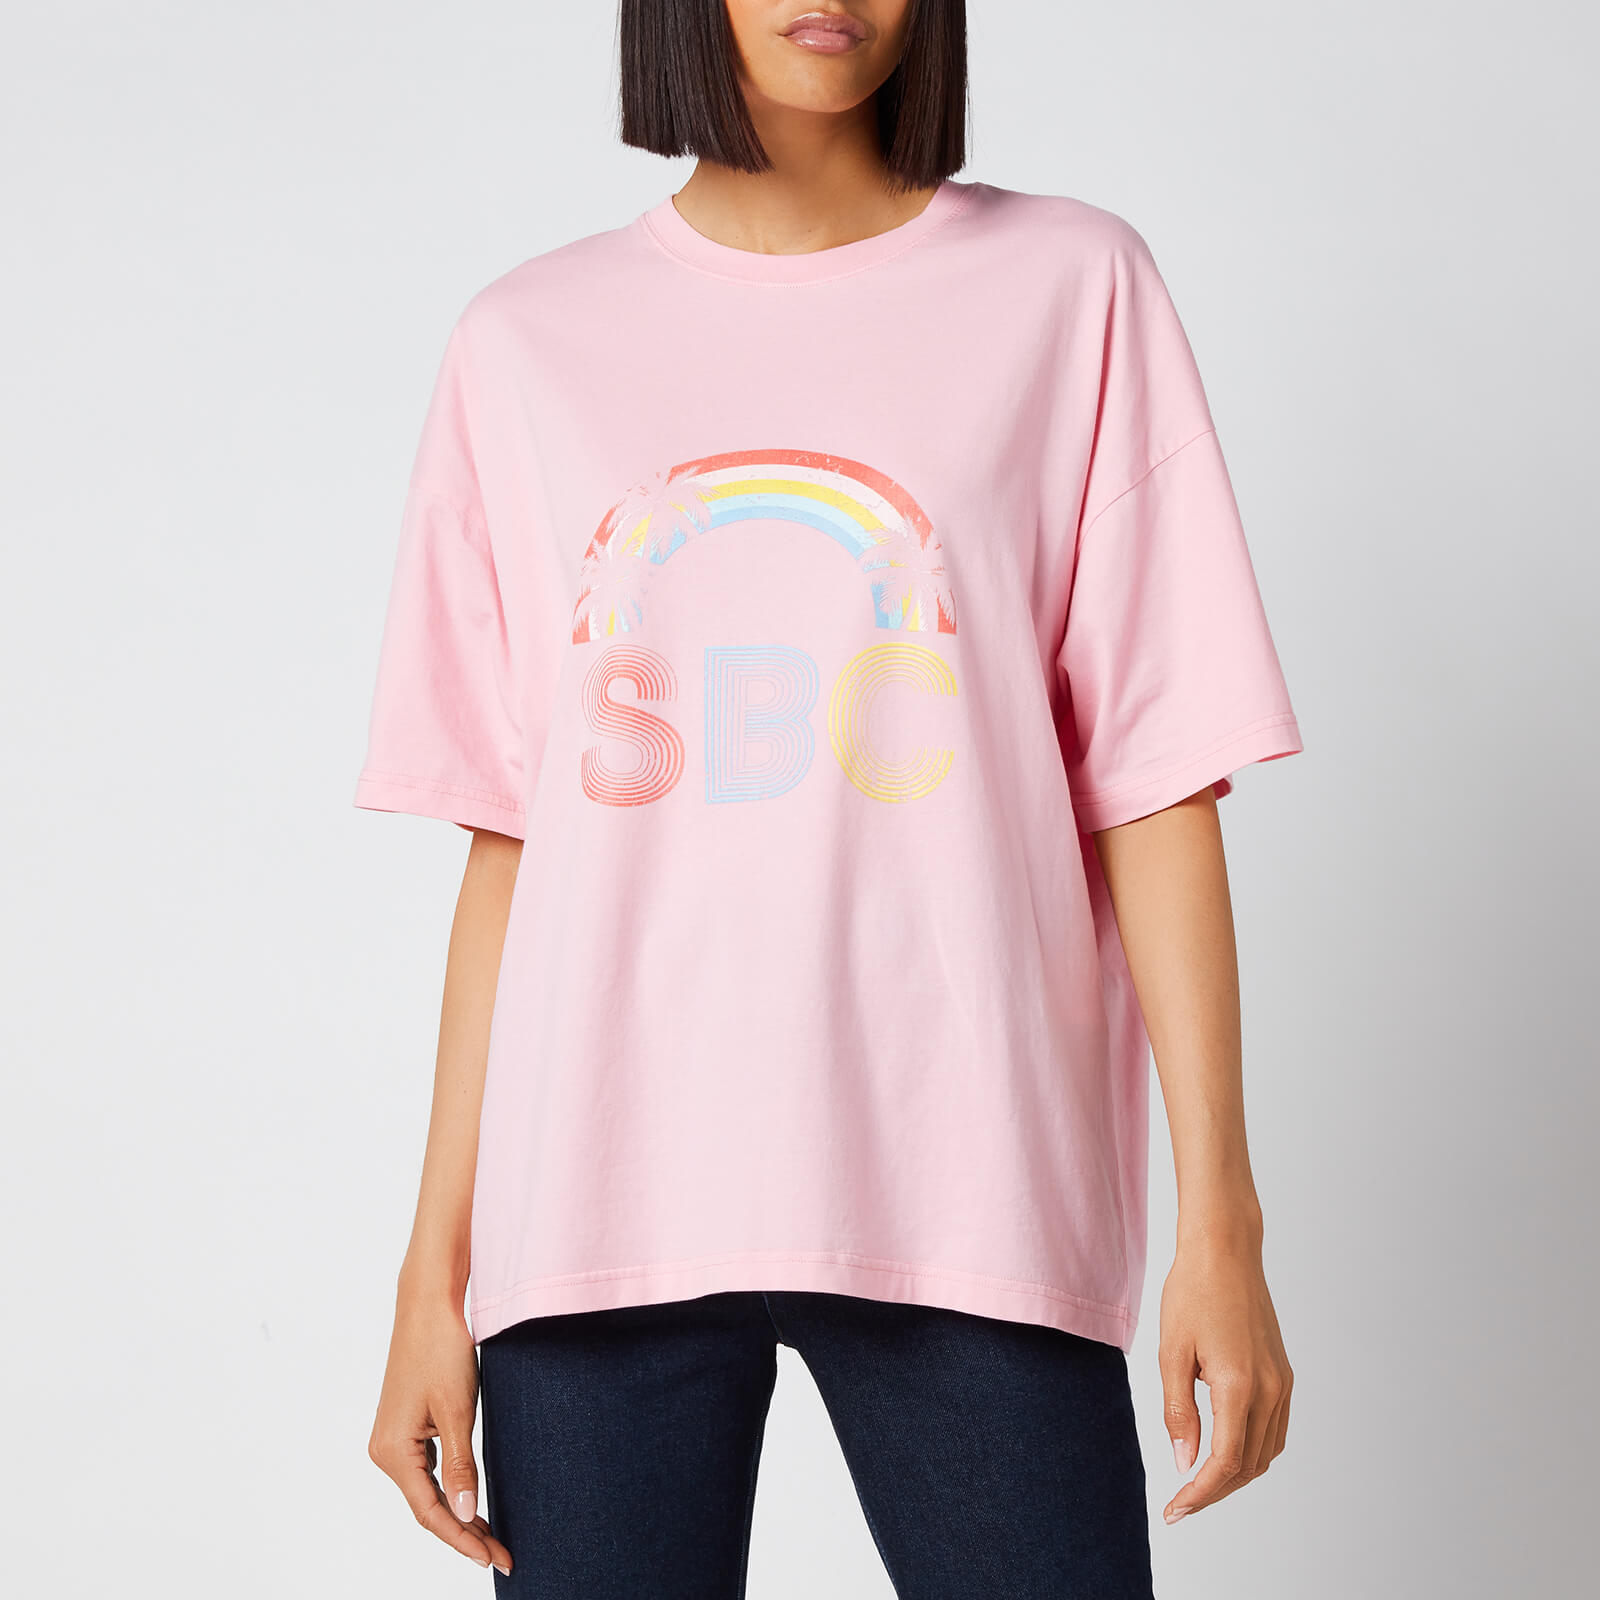 See by Chloé Women's Sbc Sunset On Cotton Jersey T-Shirt - Quartz Pink - EU 34/UK 6